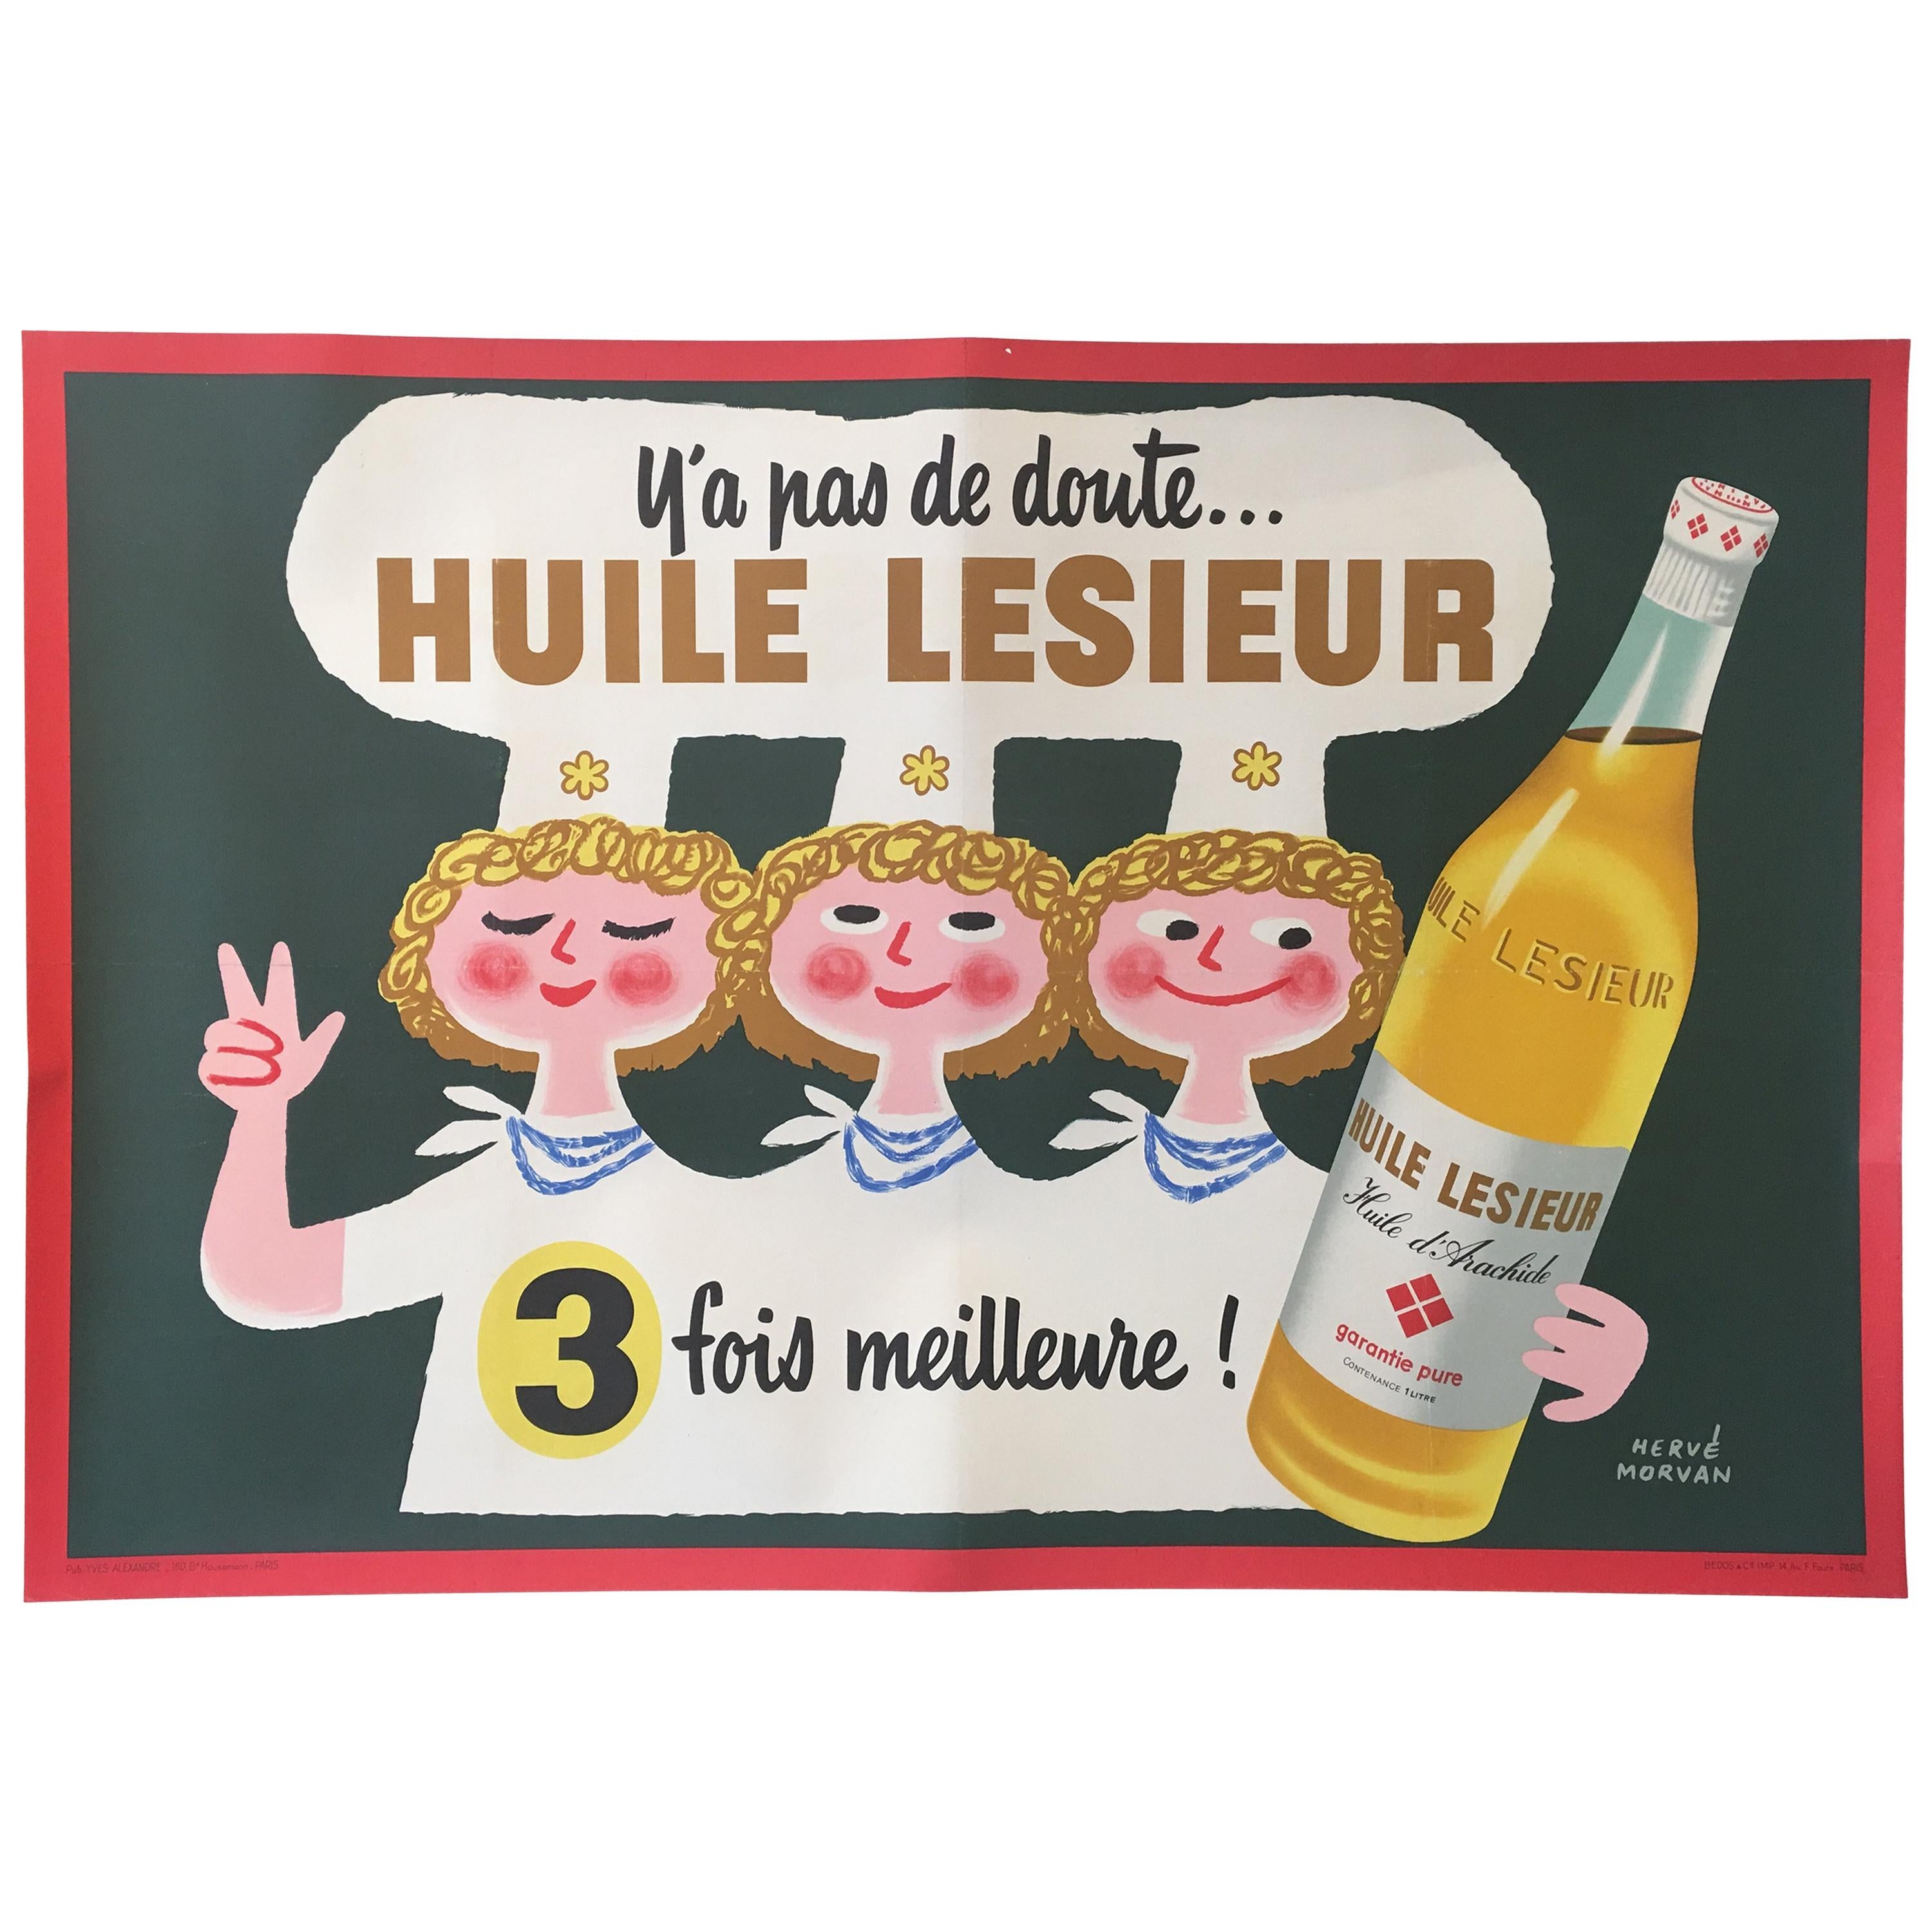 Original Vintage French Advertising Poster, 'Huile Lesieur' by Herve Morvan